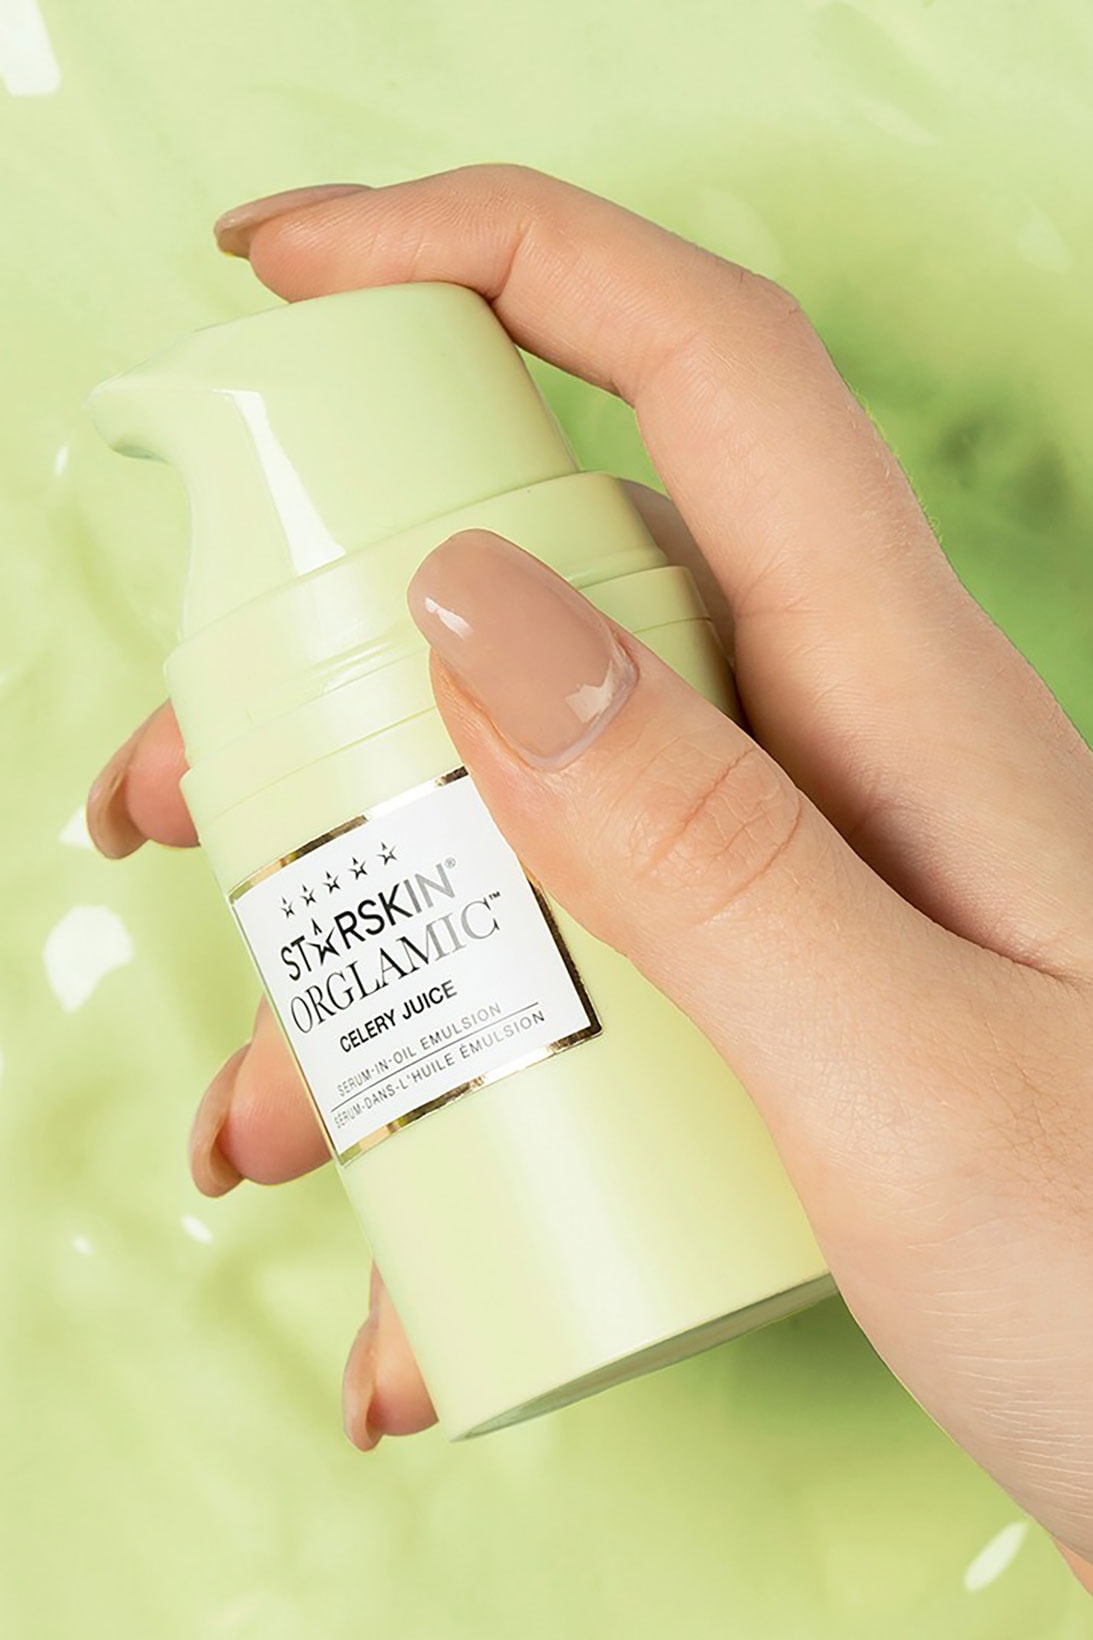 STARSKIN Orglamic Celery Juice Serum-In-Oil Emulsion Skincare Beauty